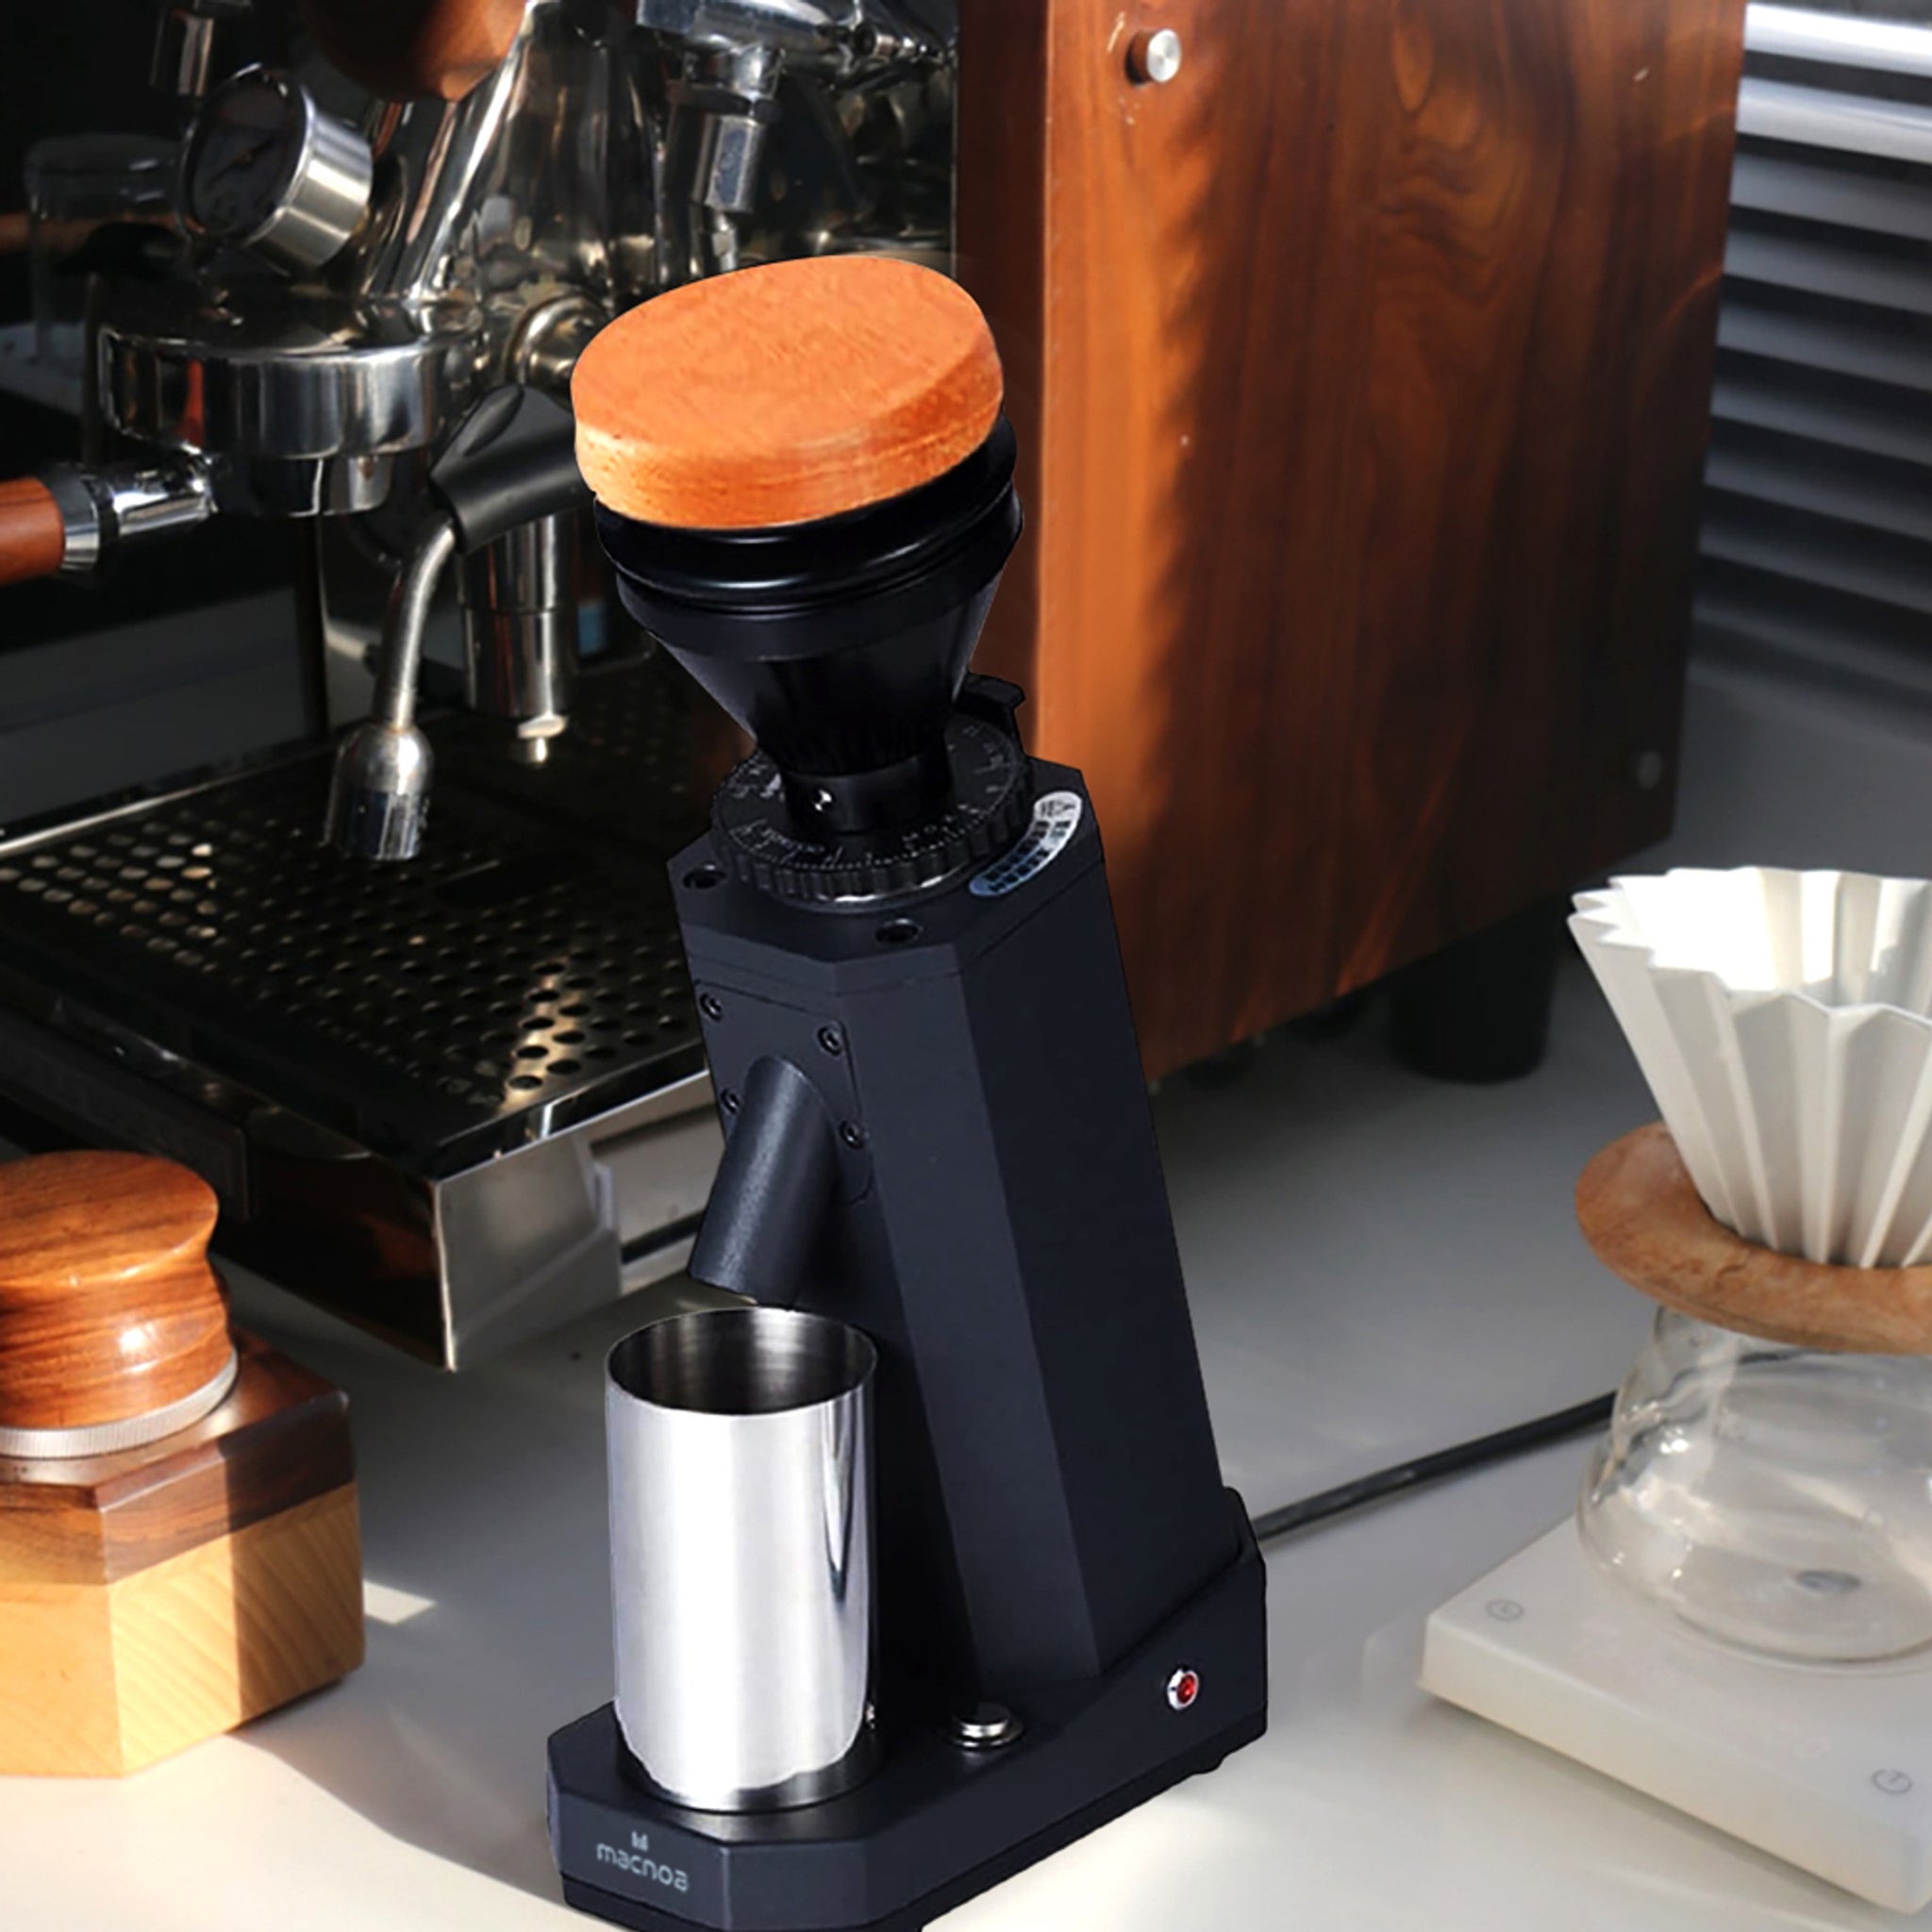 Macnoa High Quality Coffee Grinder / Adjustable Coarseness Levels